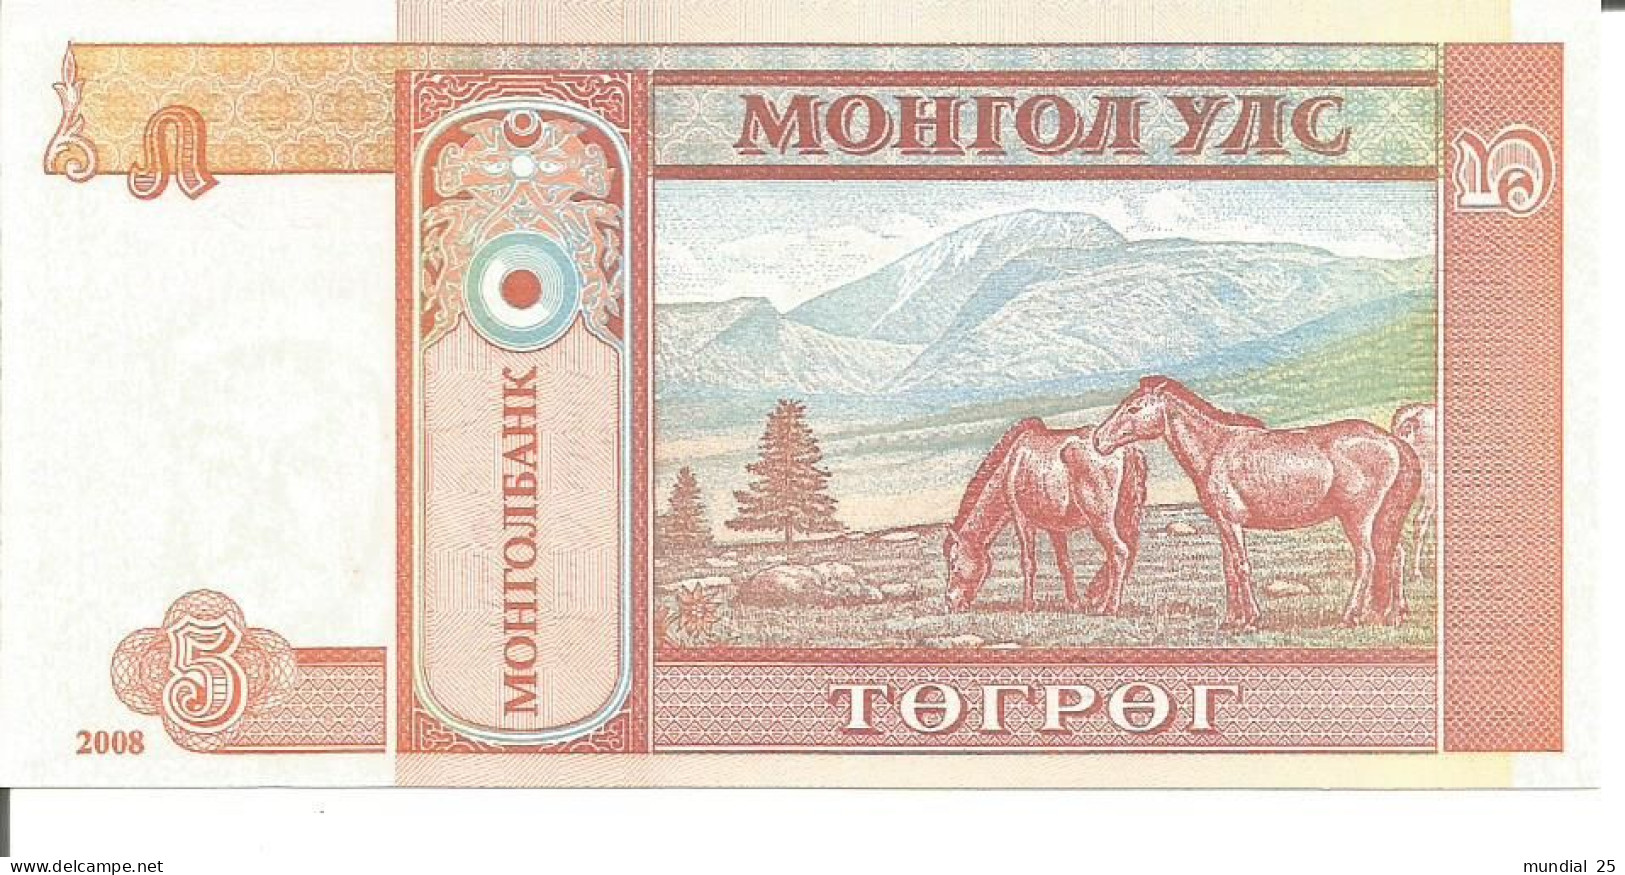 3 MONGOLIA NOTES 5 TUGRIK 2008 - Mongolië